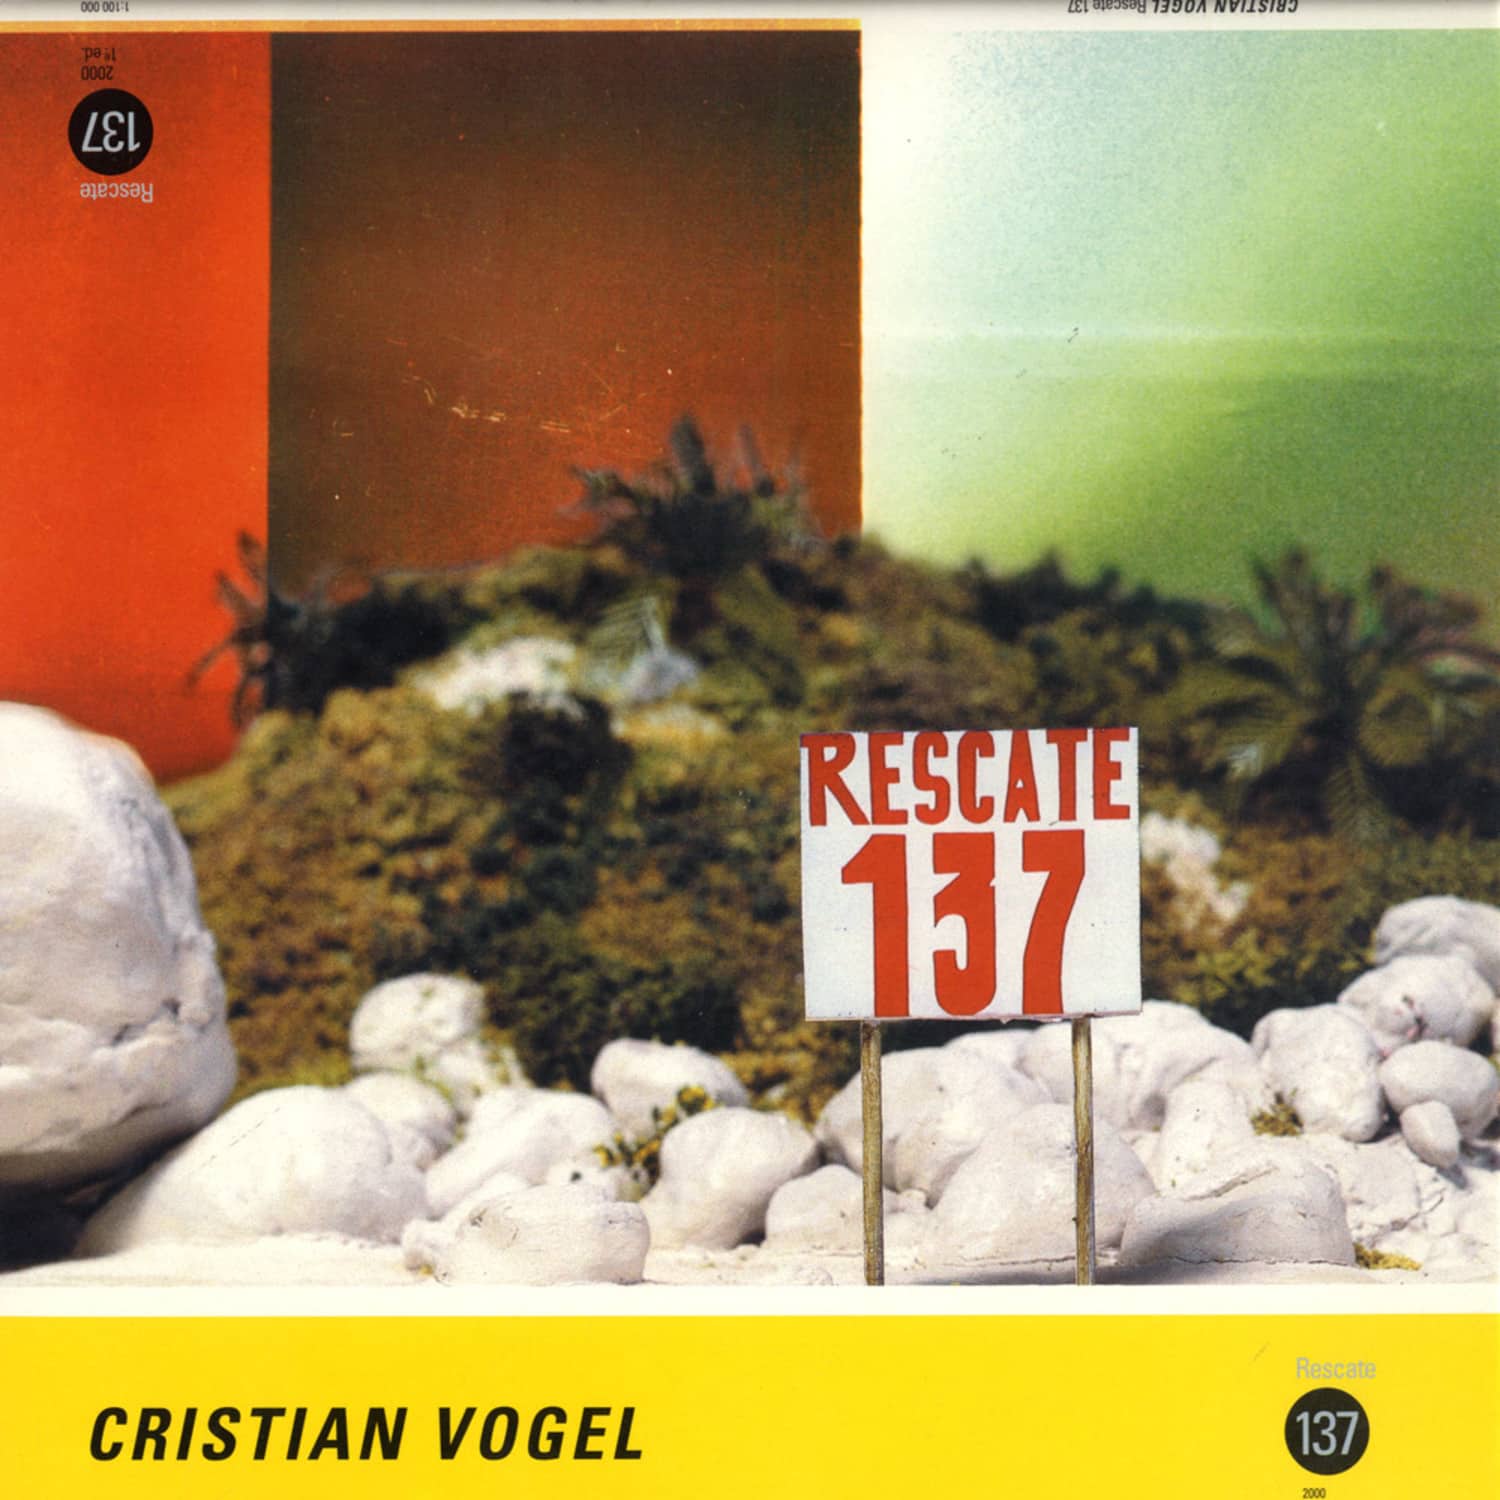 Cristian Vogel - RESCATE 137 